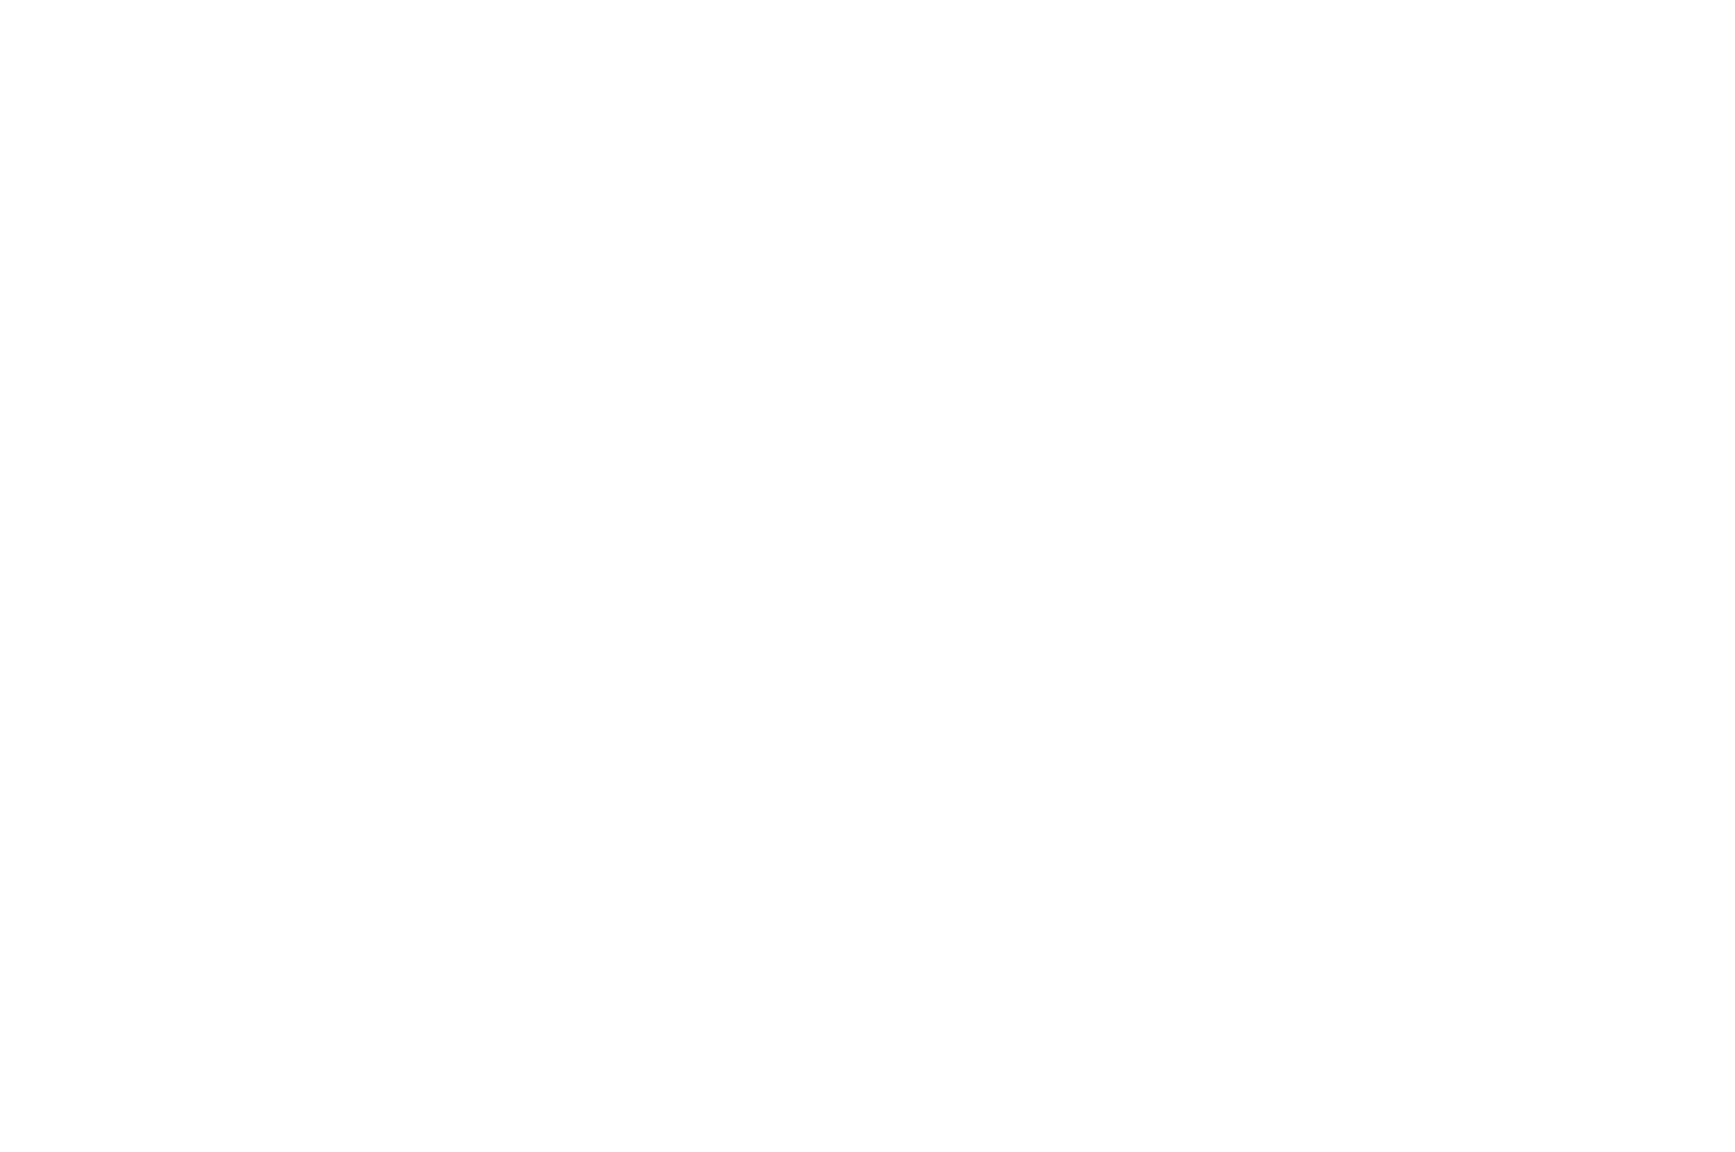 SPECIAL JURY AWARD - SPAIN INTERNATIONAL FILM FESTIVAL - 2021